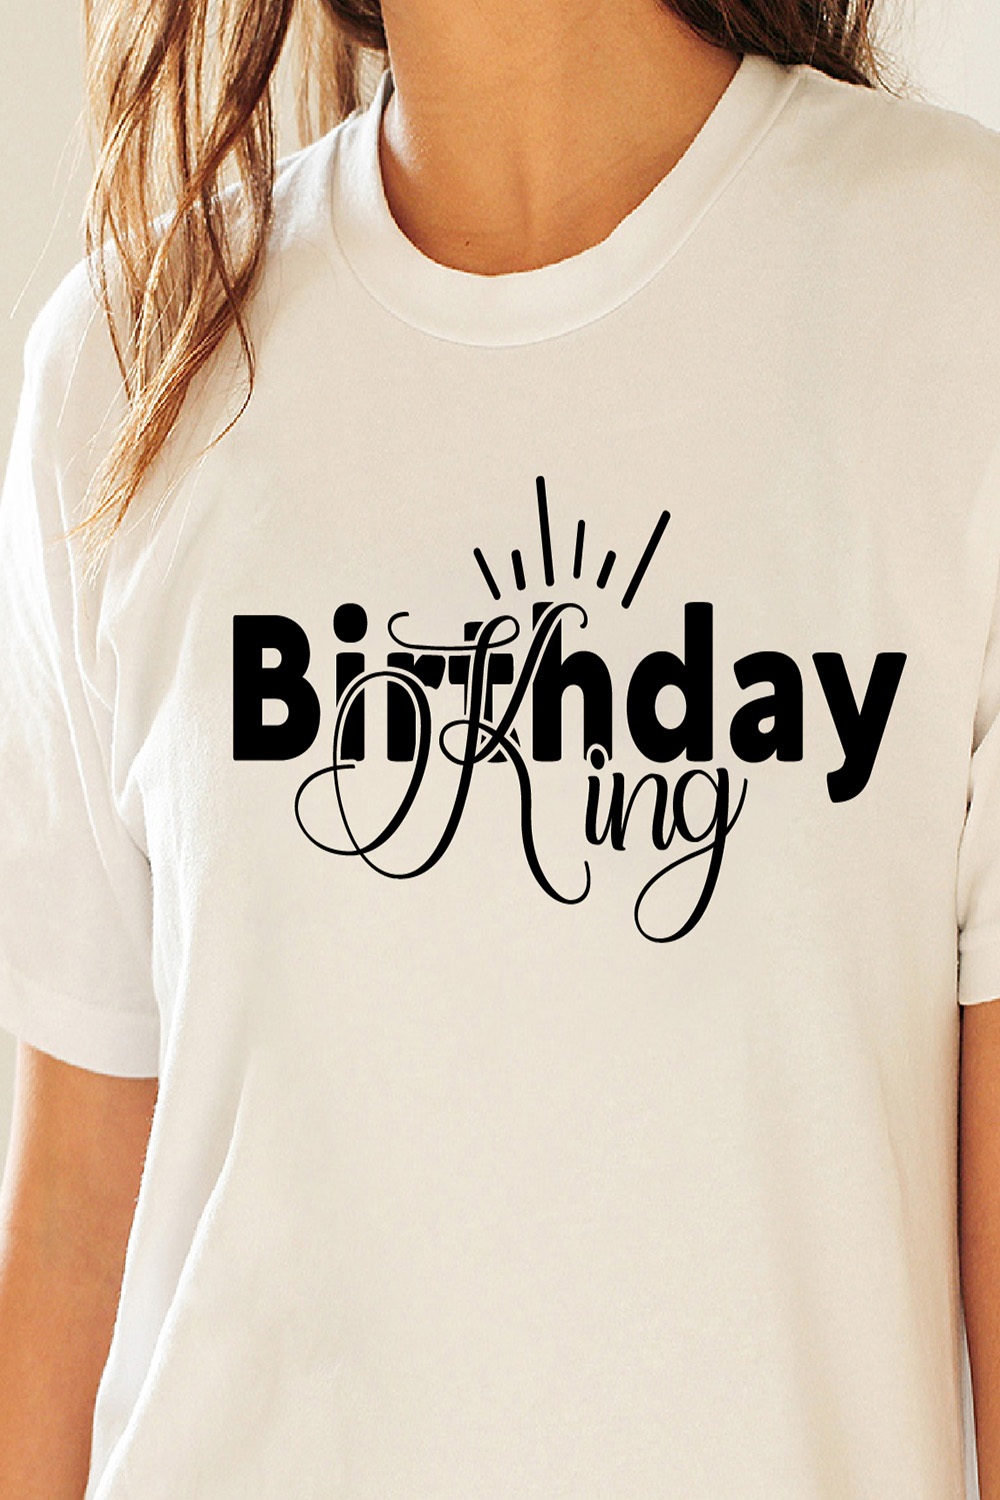 Typography T-shirt Birthday King Design pinterest image.